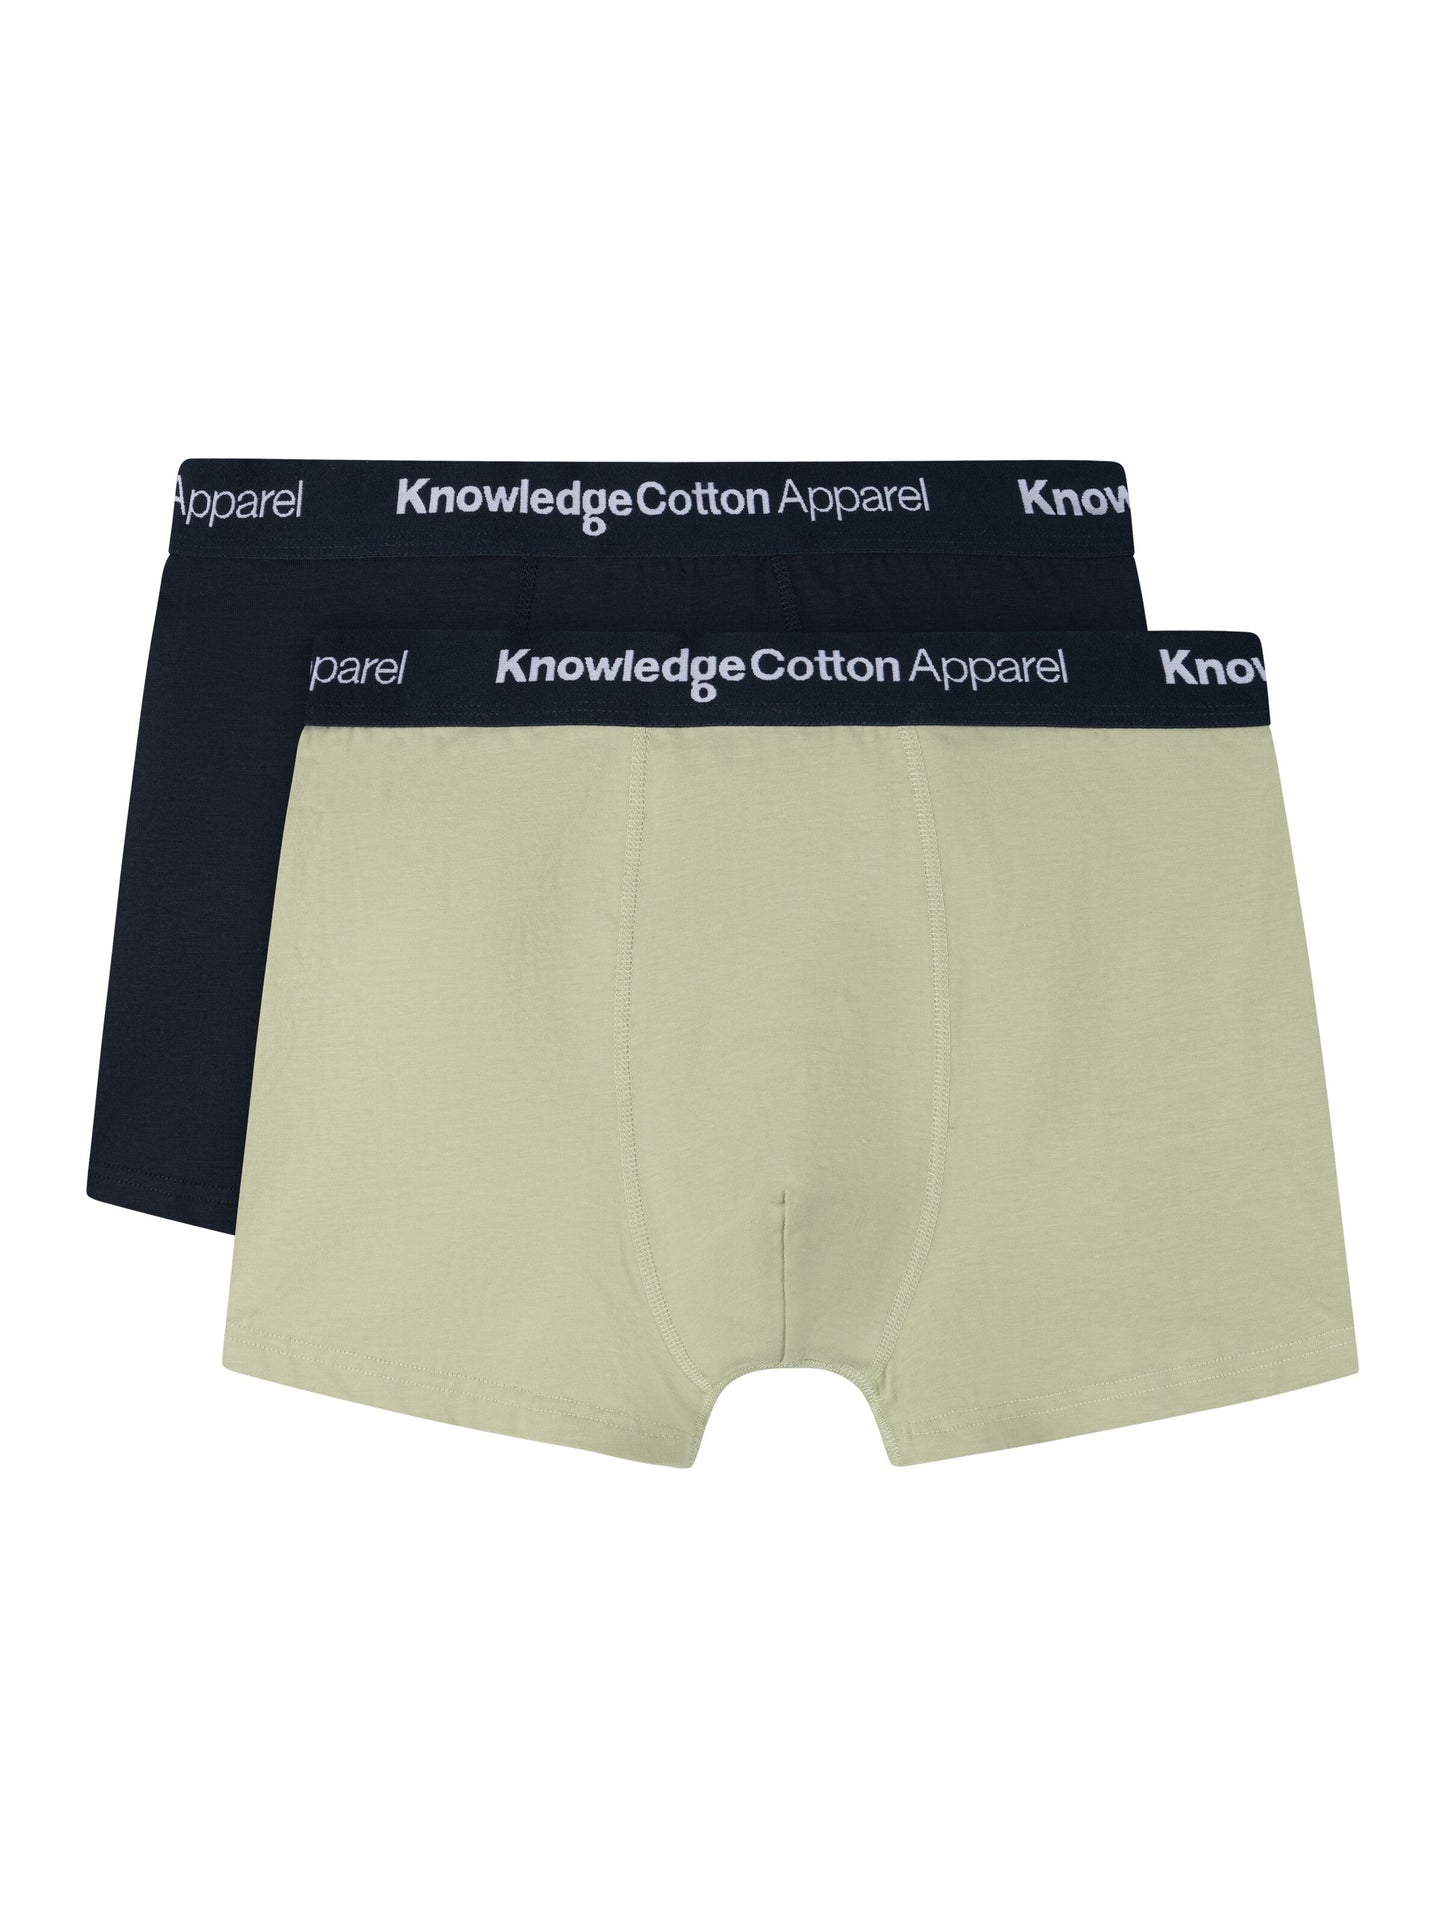 KCA - 2 pack underwear - Vegan Swamp